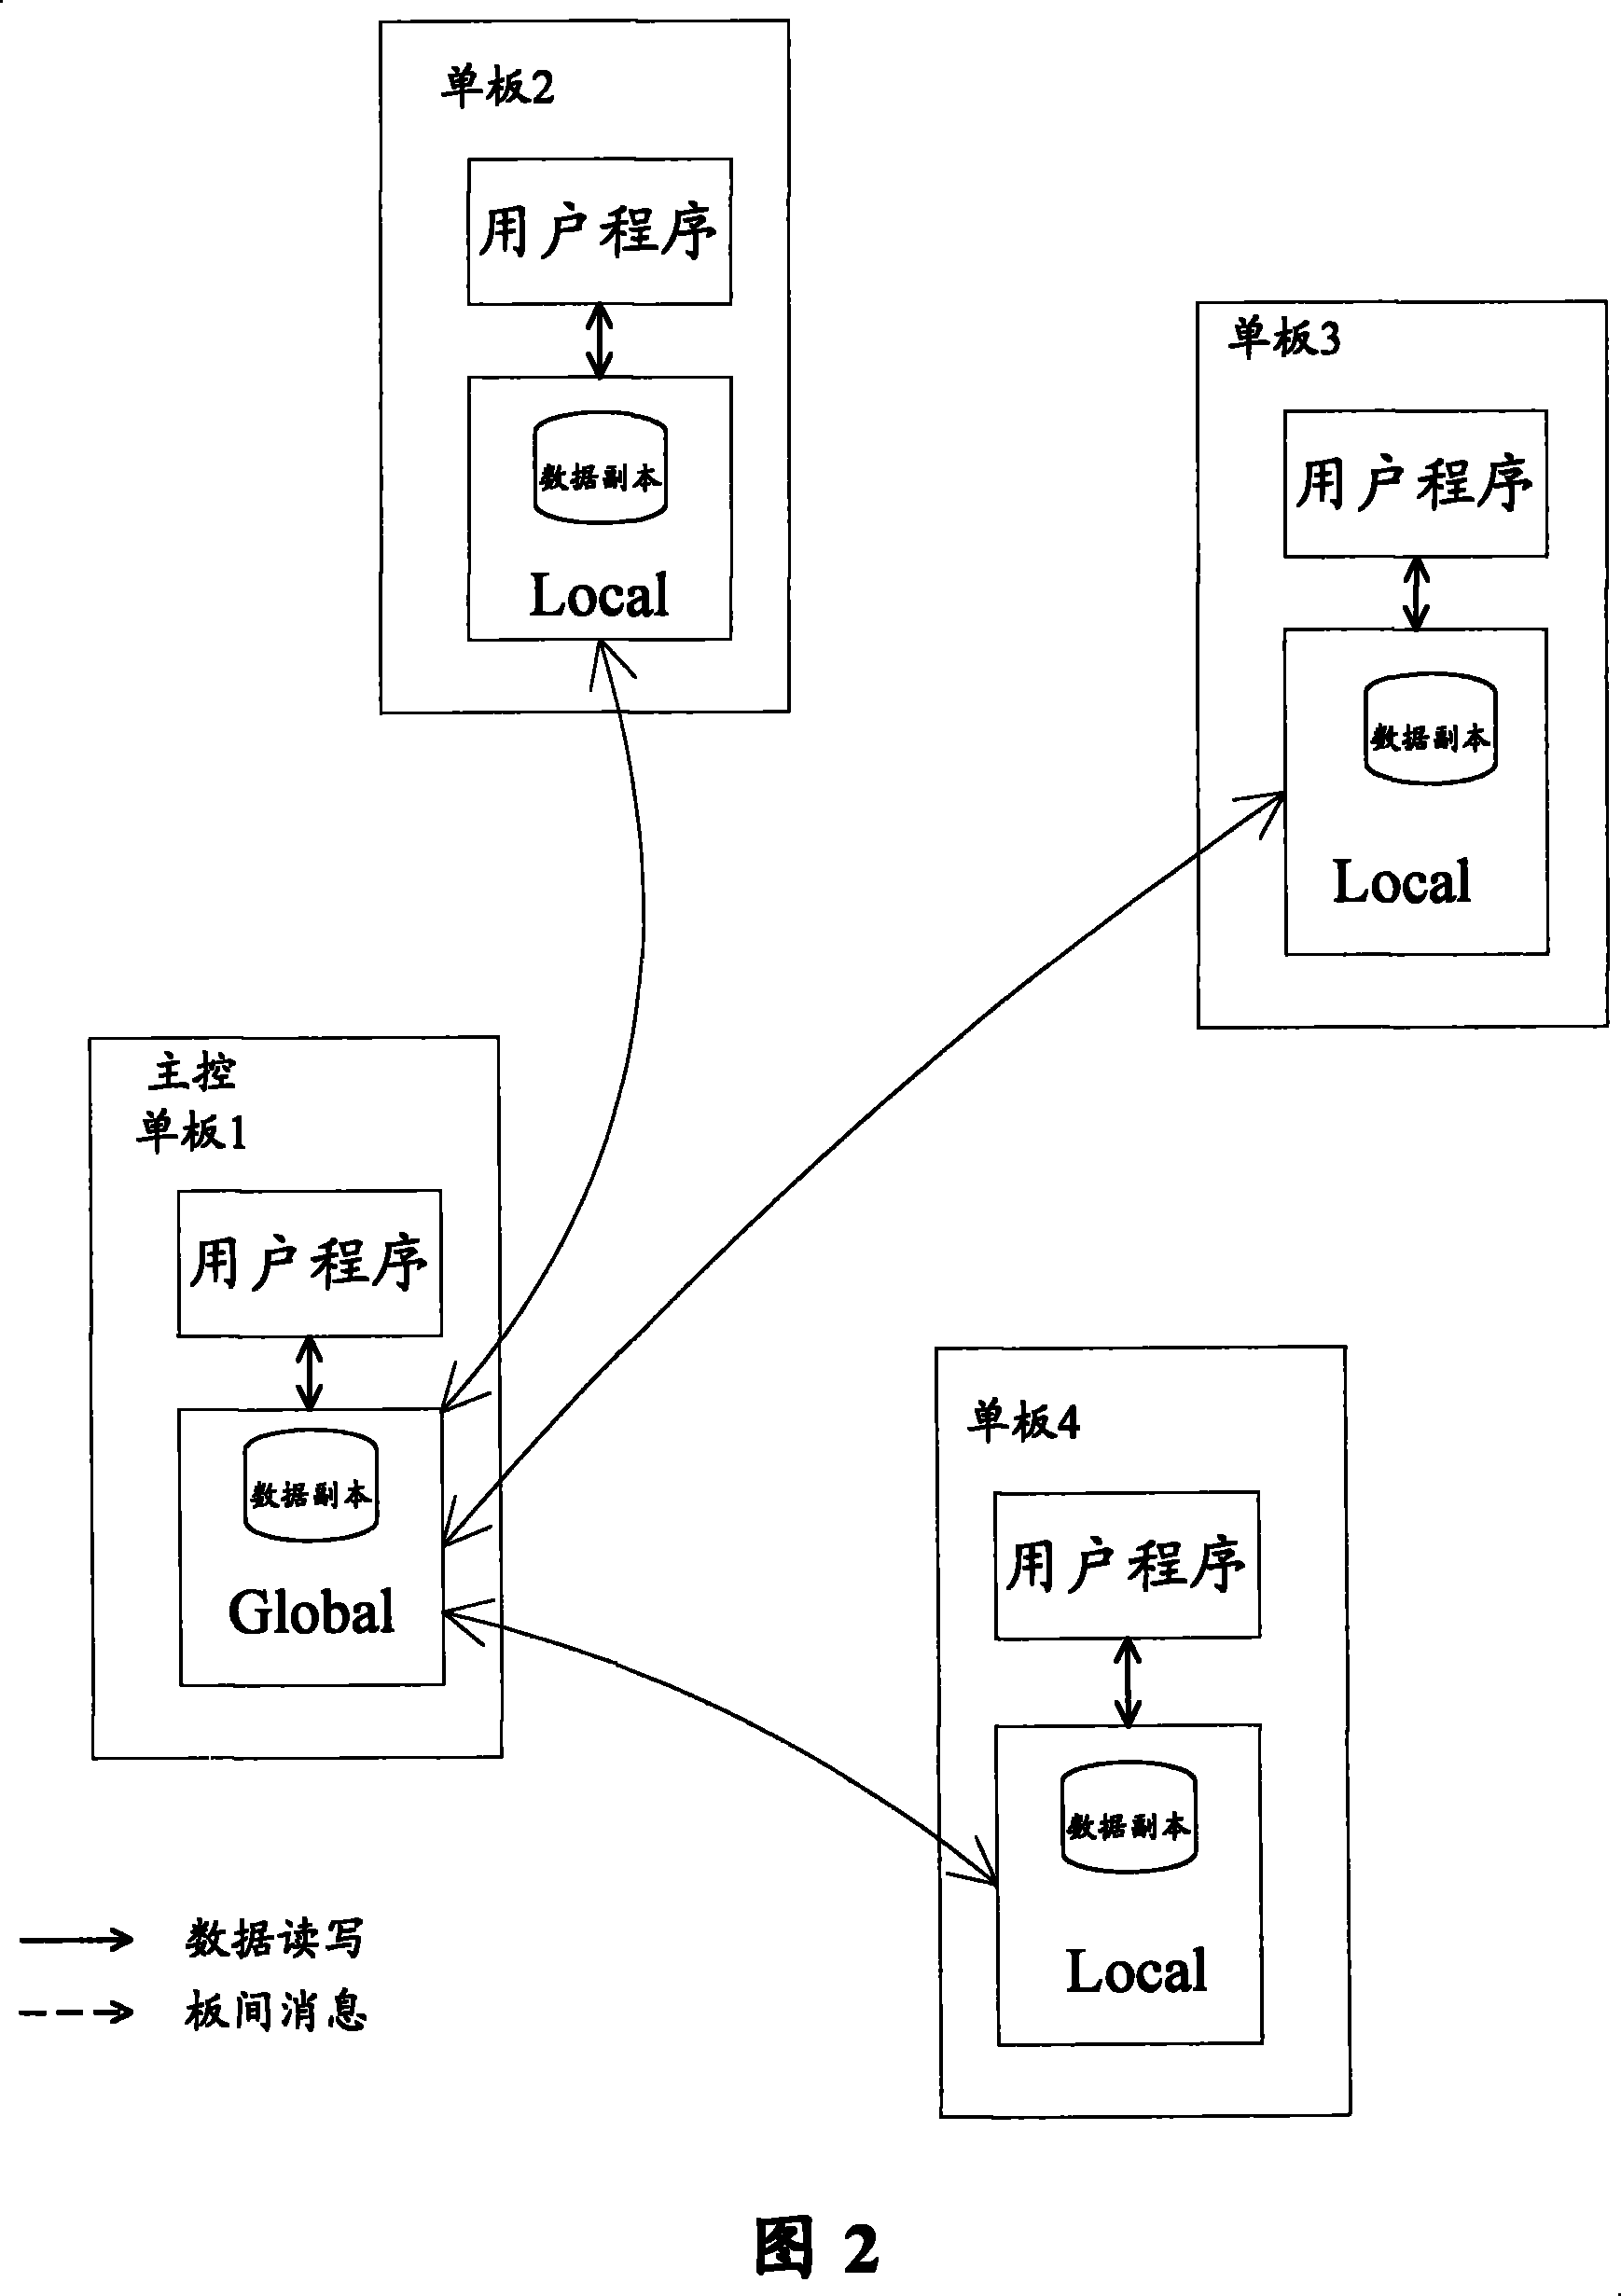 Data synchronization method of distributed system single panel